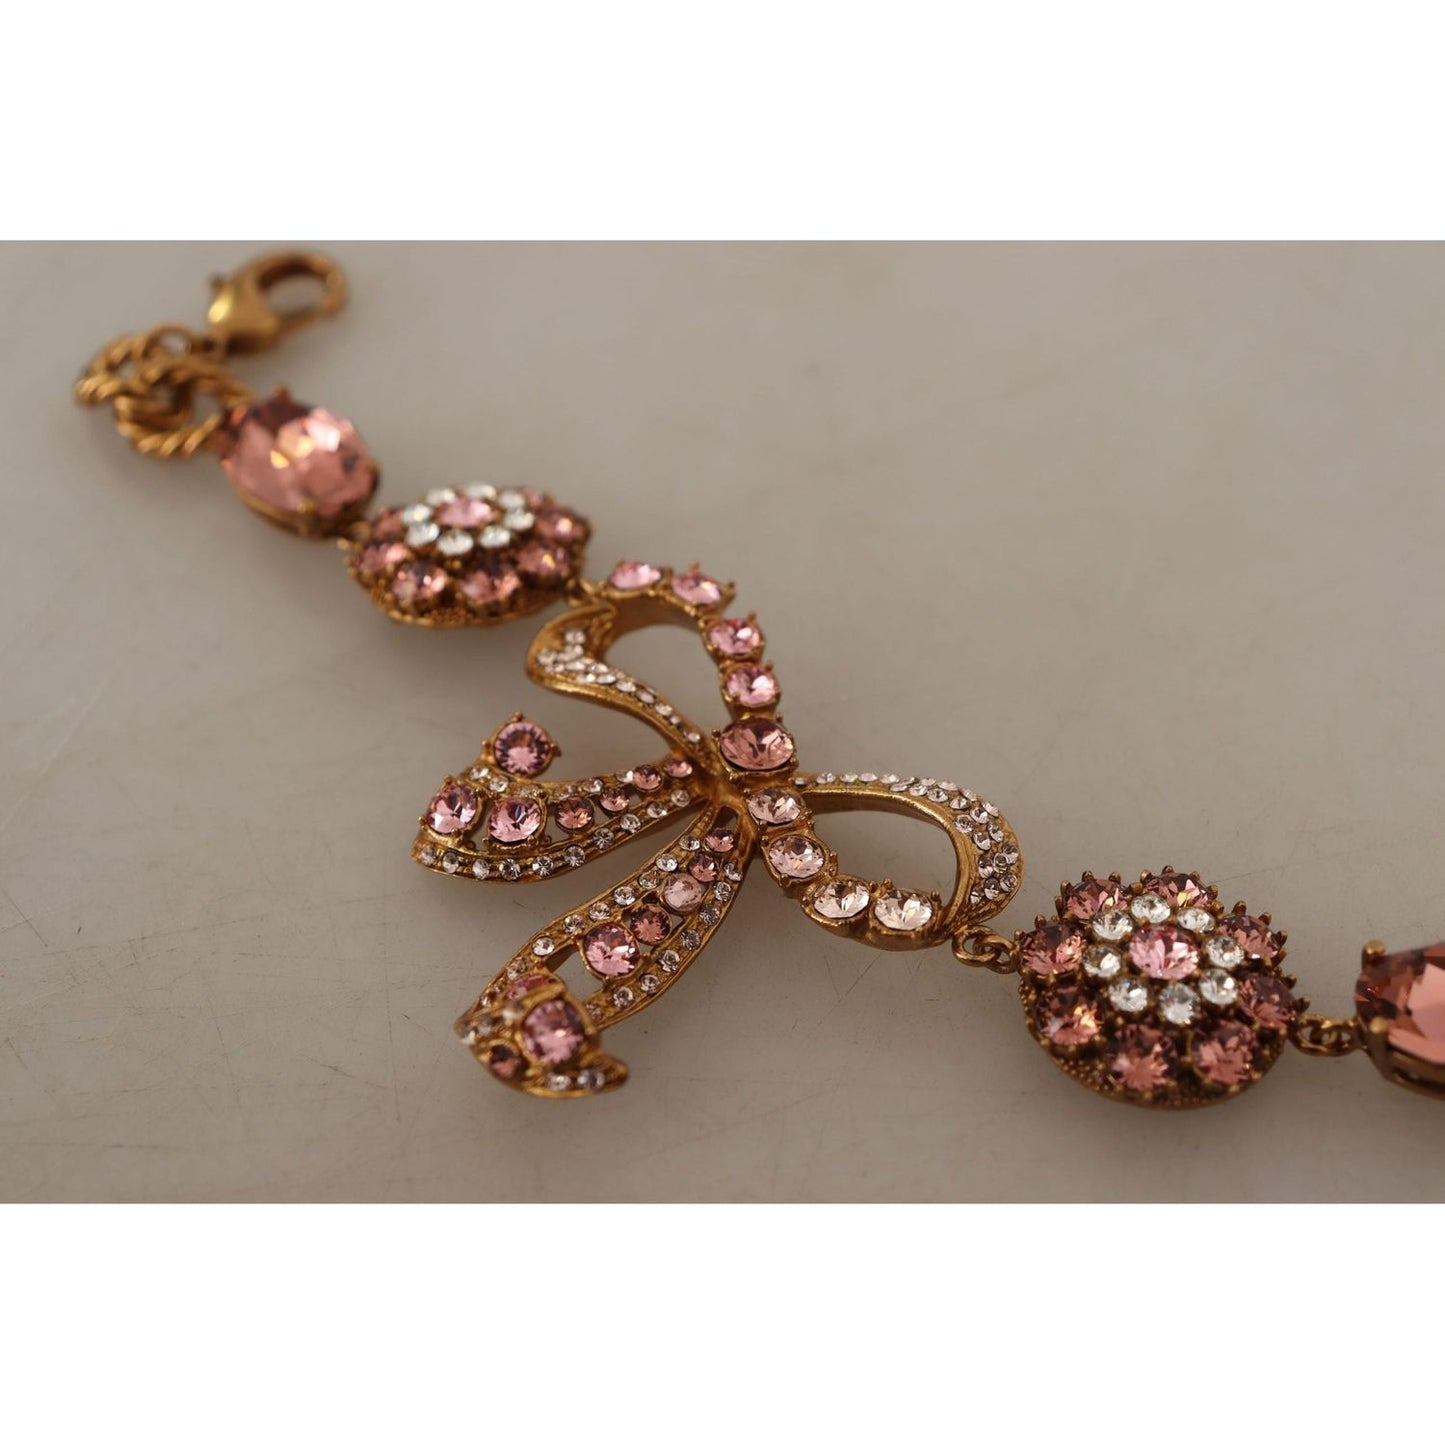 Dolce & Gabbana Elegant Crystal Charm Gold Bracelet gold-brass-chain-baroque-crystal-embellished-bracelet WOMAN BRACELET IMG_8713-scaled-e0c56983-205.jpg